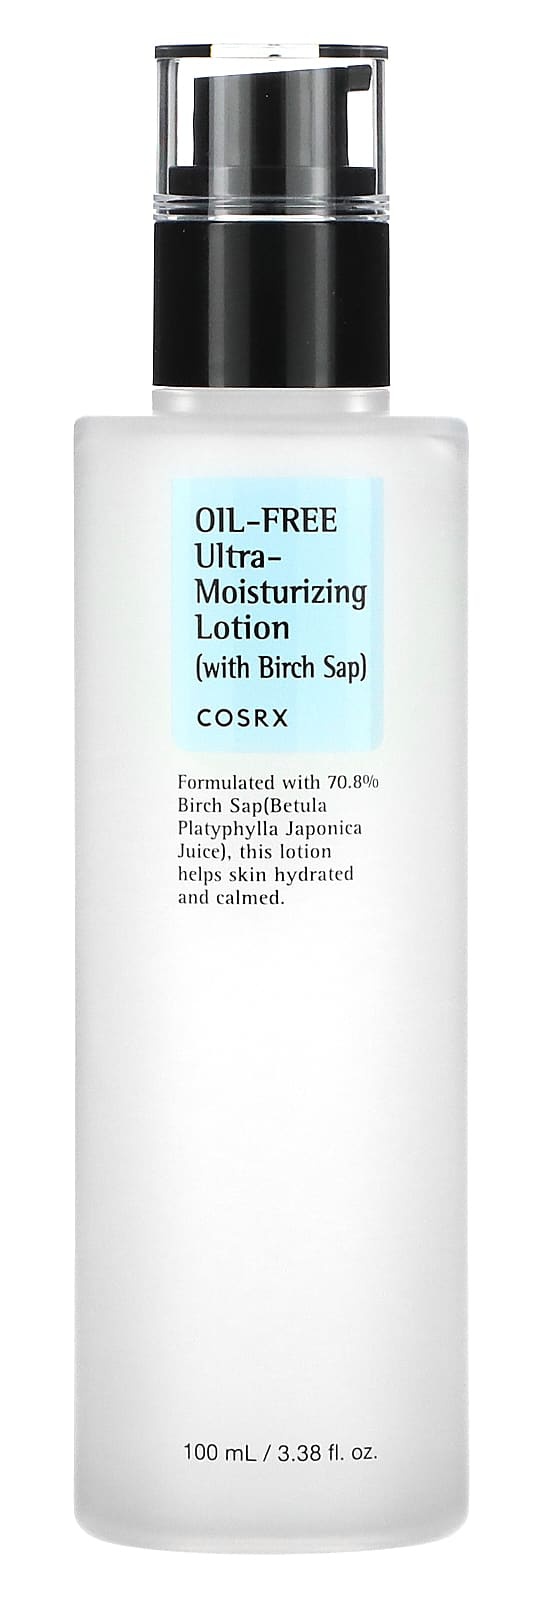 COSRX Oil-free Ultra-moisturizing Lotion With Birch Sap